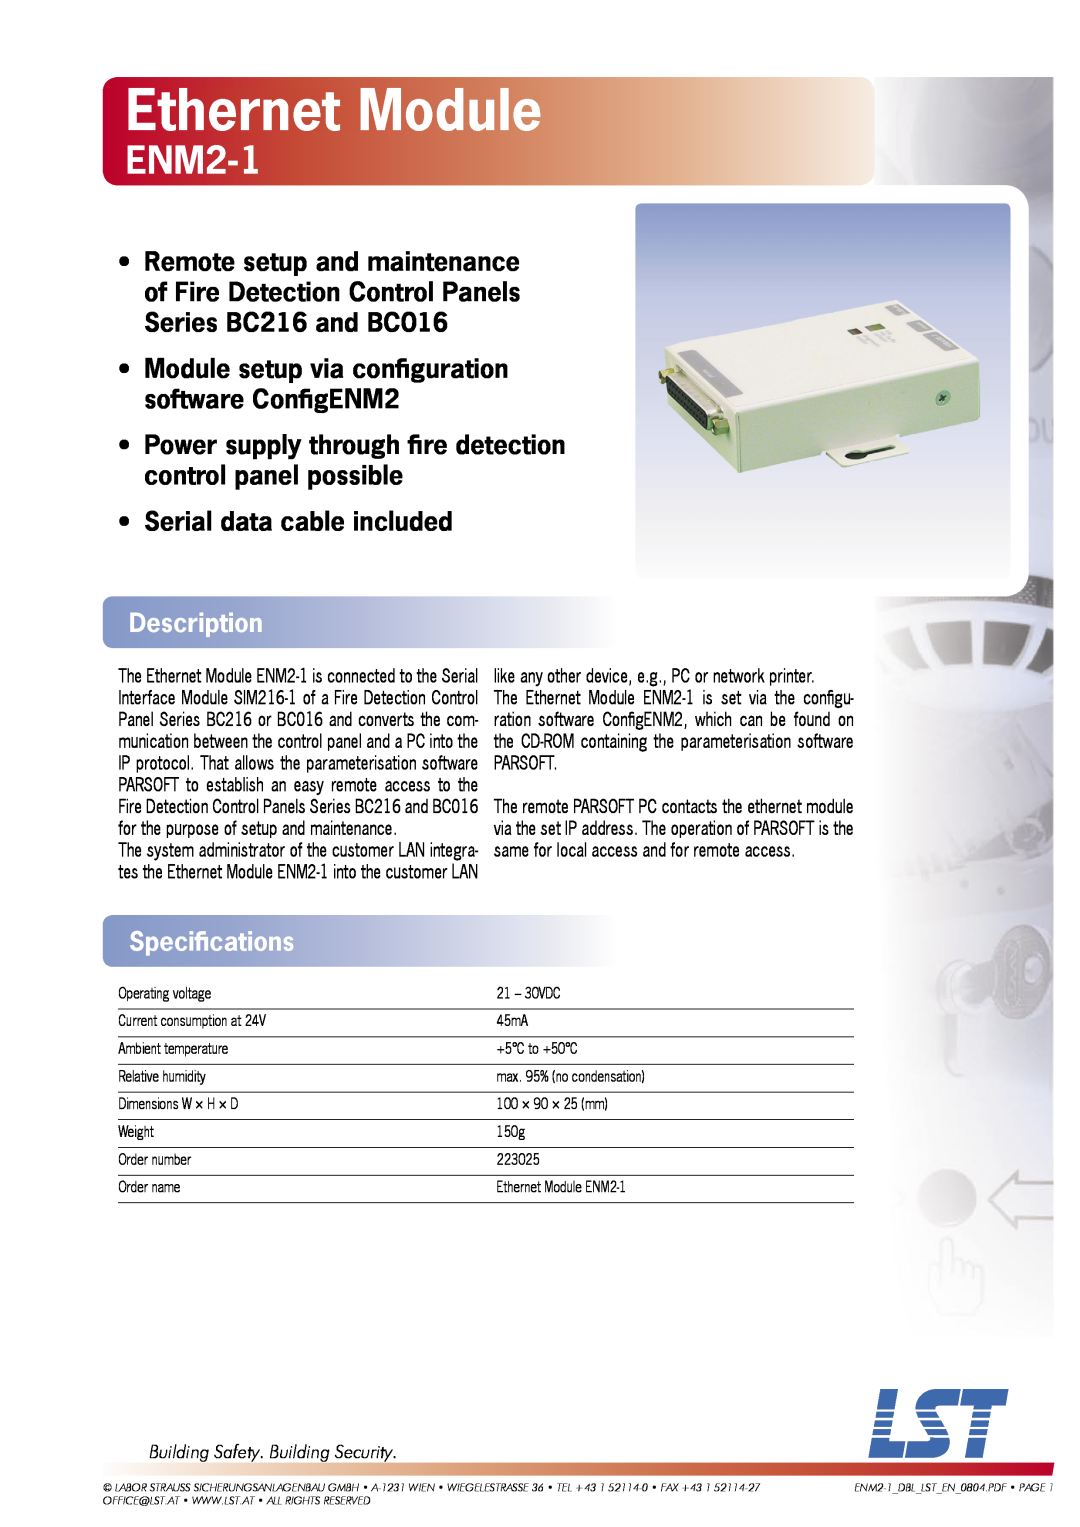 LST ENM2-1 specifications Ethernet Module, Power supply through ﬁre detection control panel possible, Description, Parsoft 